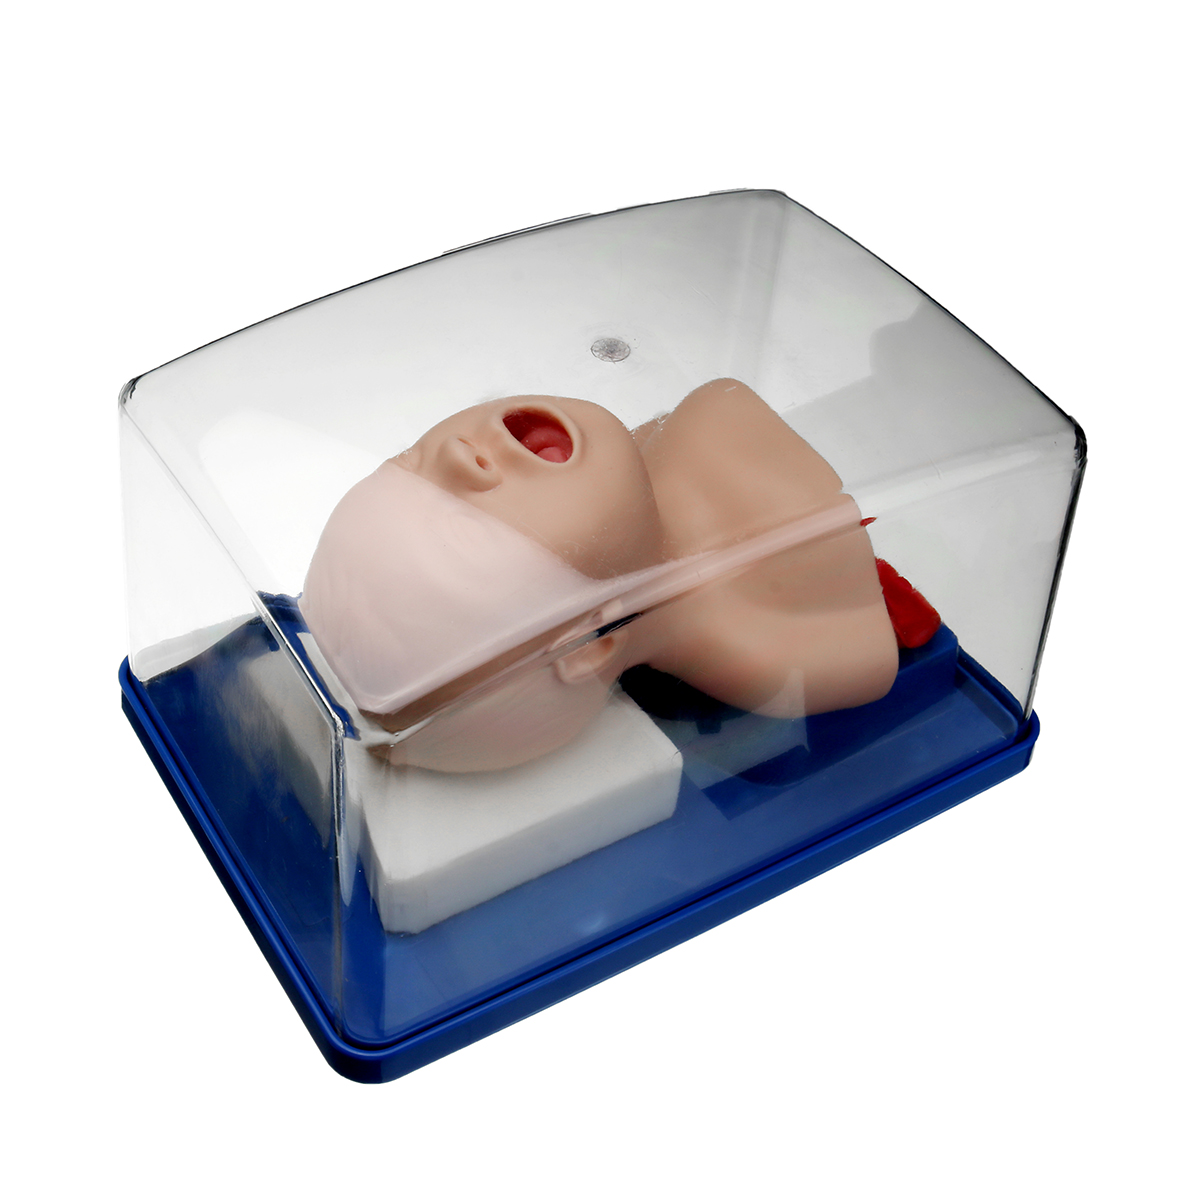 Intubation Manikin Study Teaching Model Baby Infant Airway Management Trainer Medical Model 55